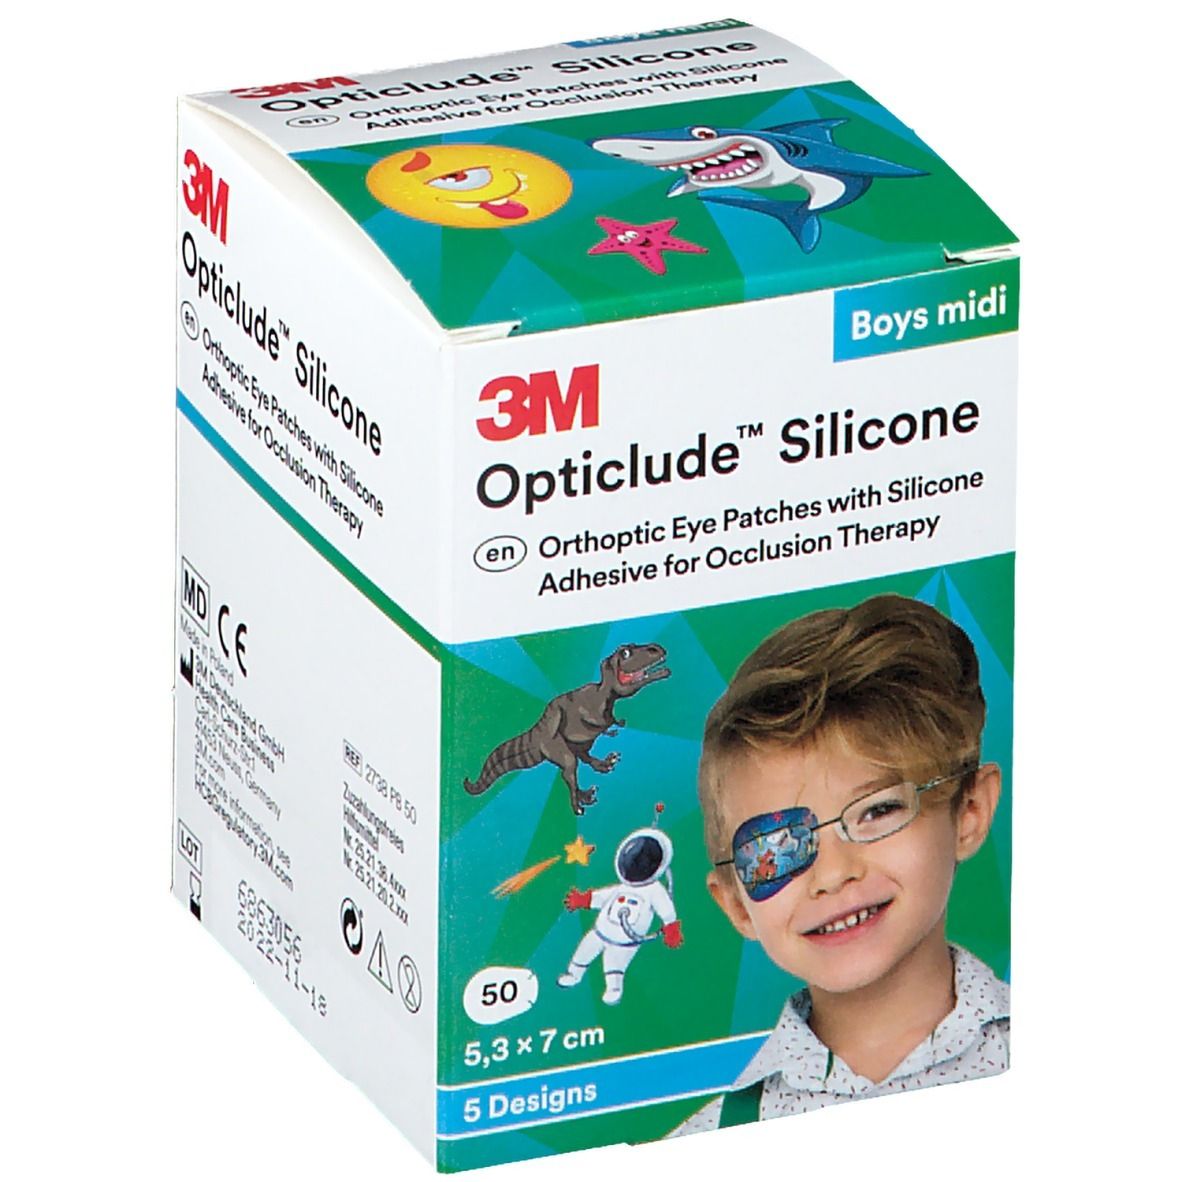 Image of 3M Opticlude™ Silicone Boys midi Augenpflaster 5,3 x 7 cm